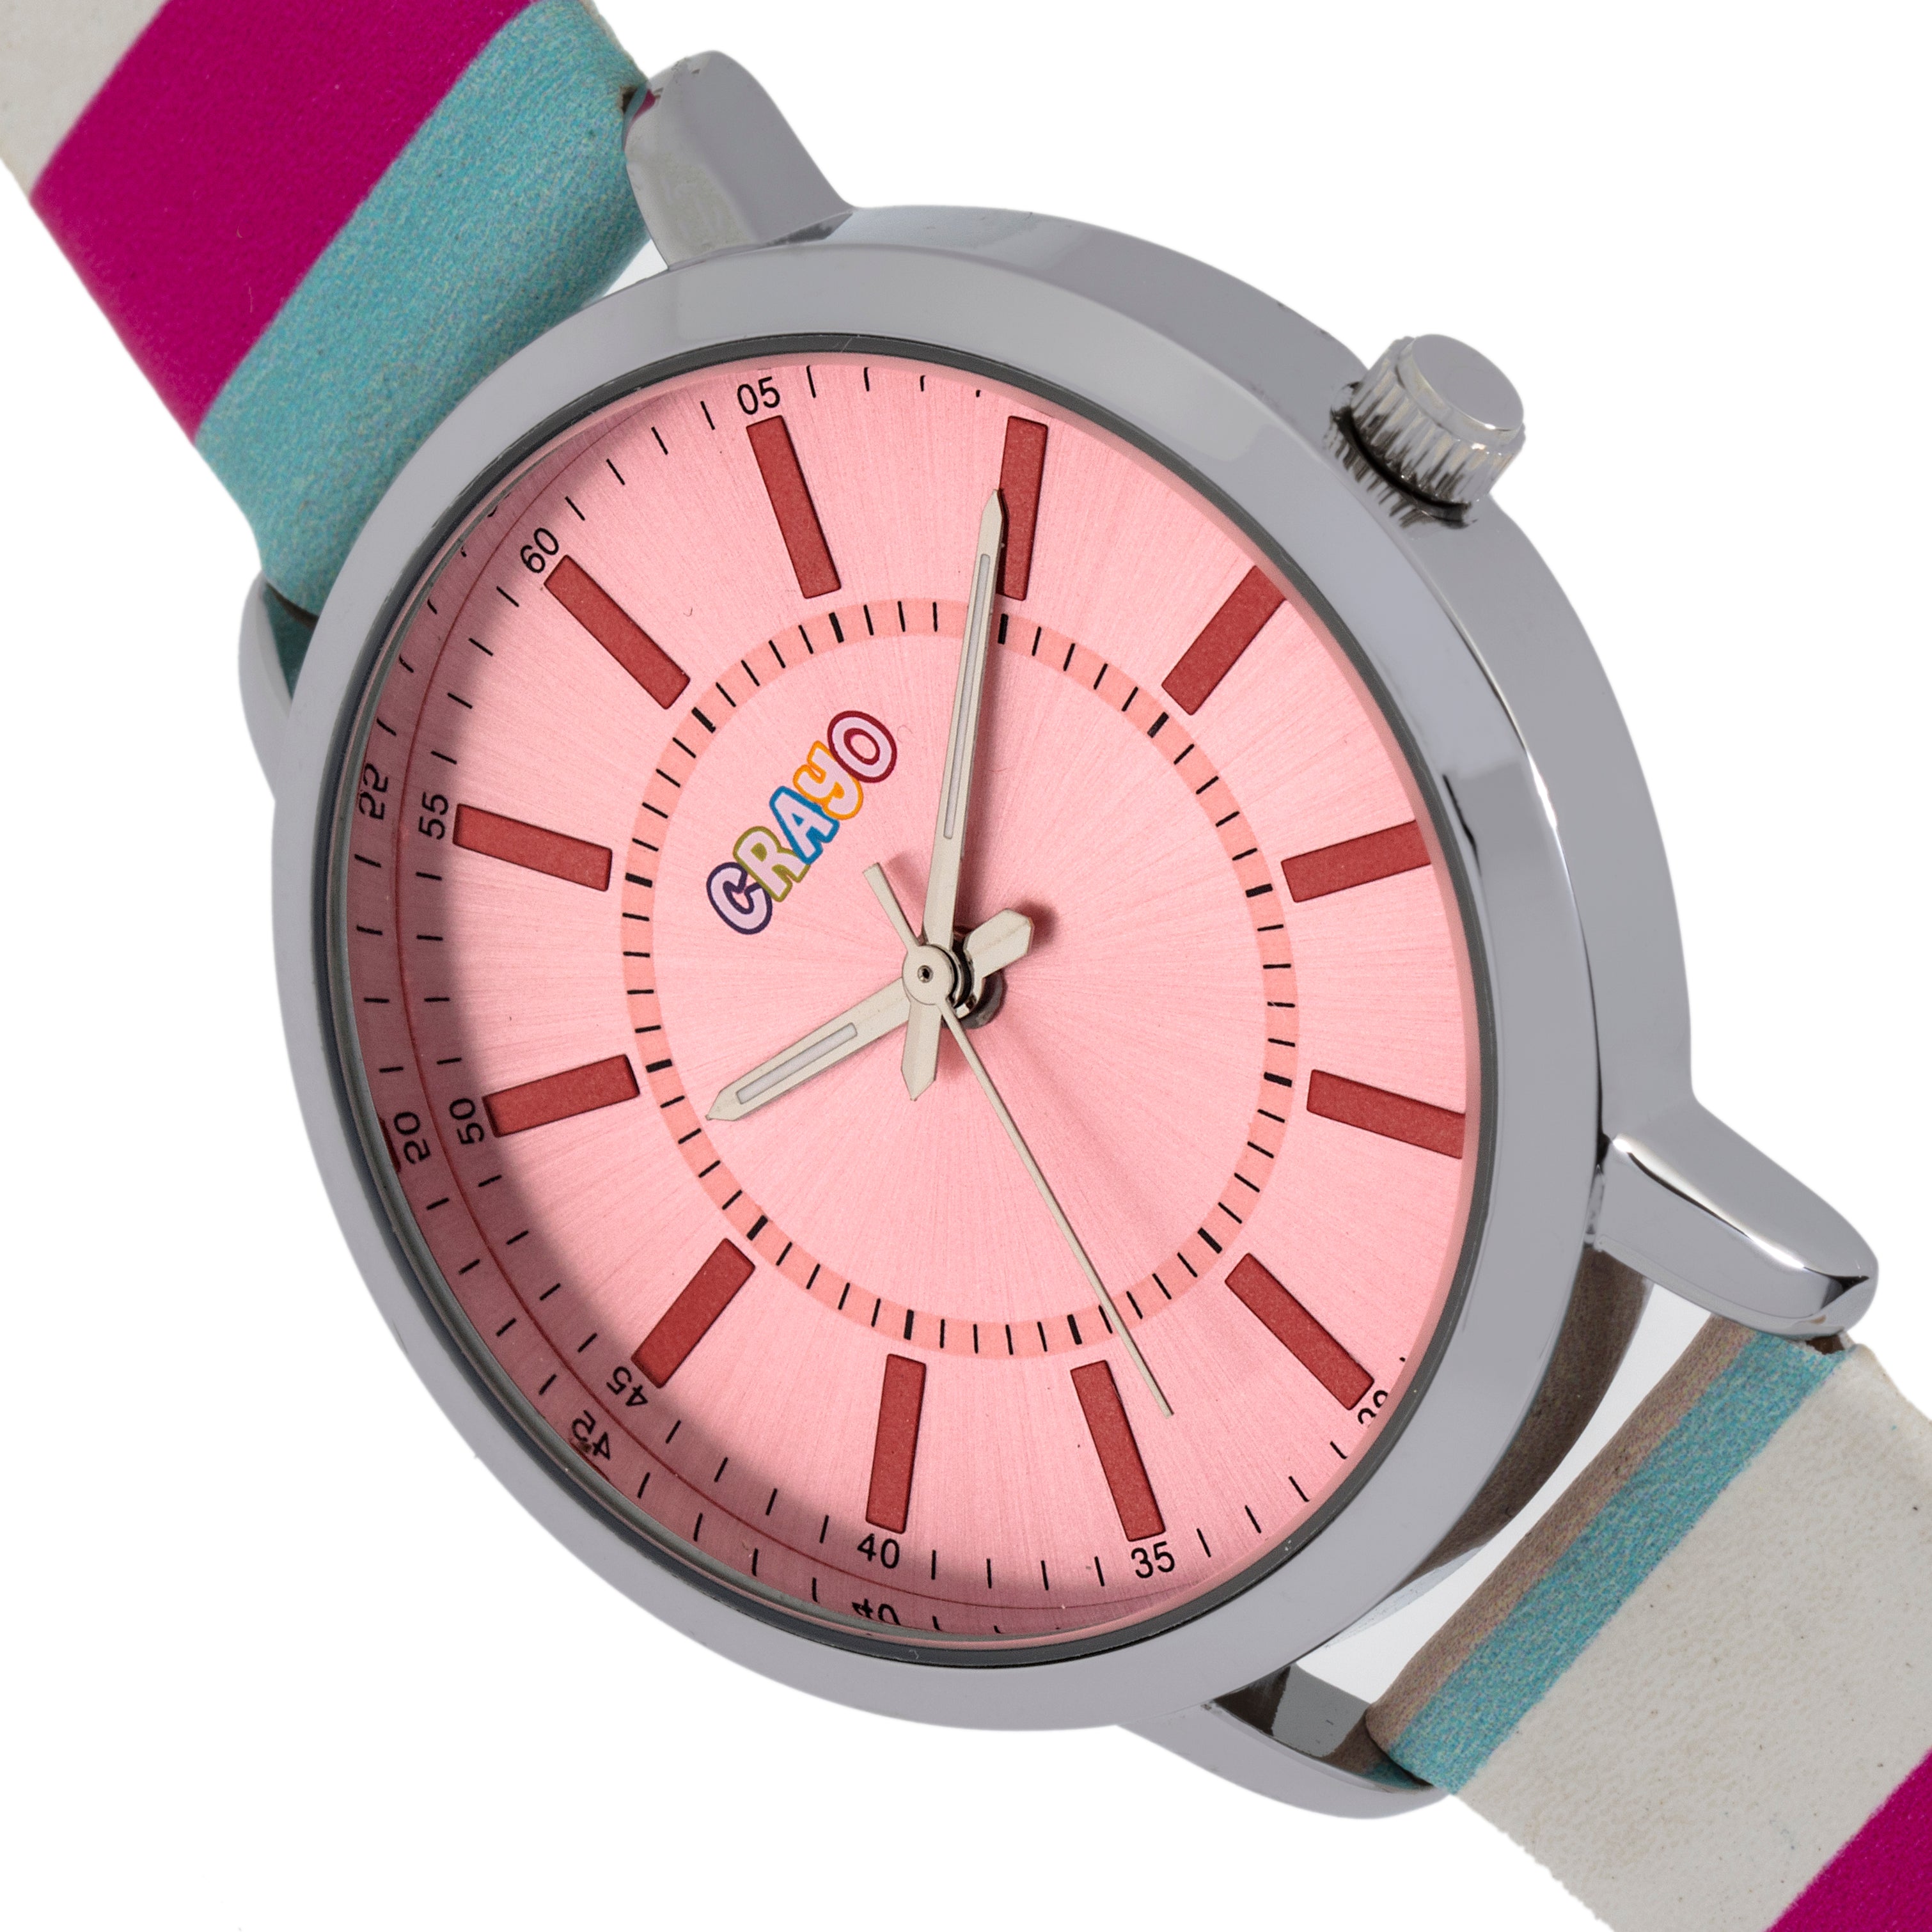 Crayo Swing Unisex Watch - Pink - CRACR5705